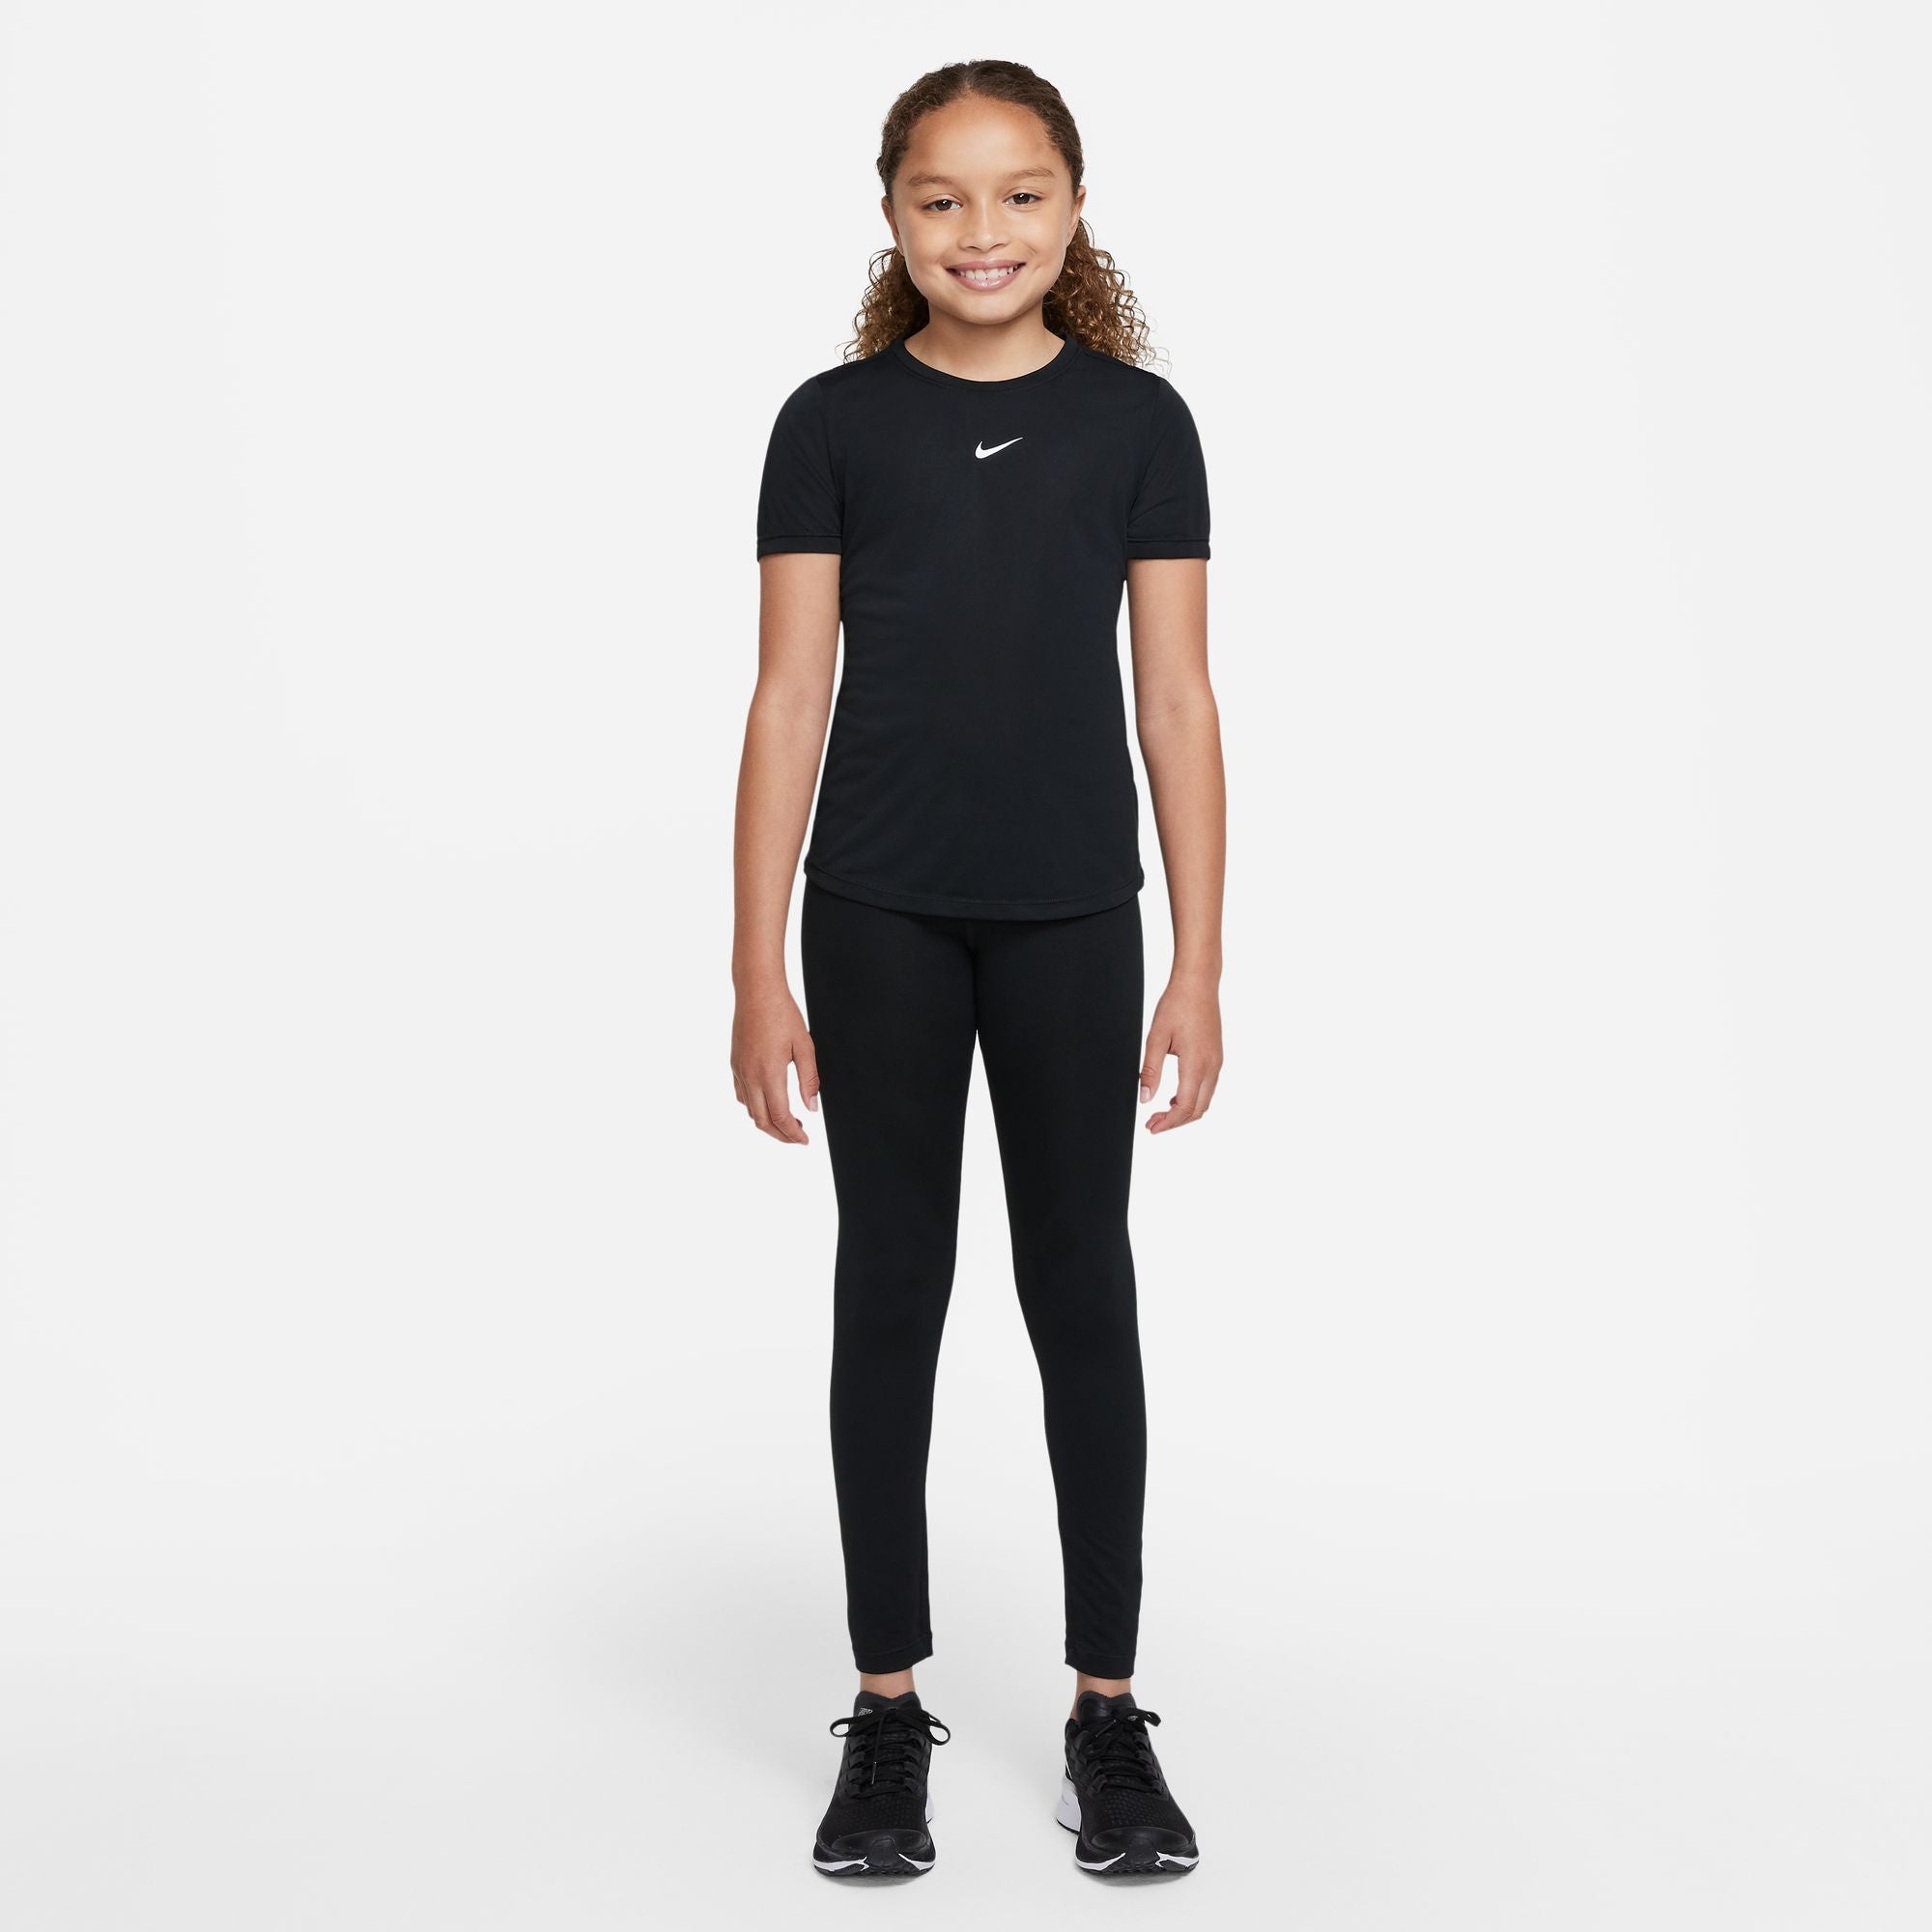 Nike Dri-FIT One Girls' Short Sleeve Top Black (4)